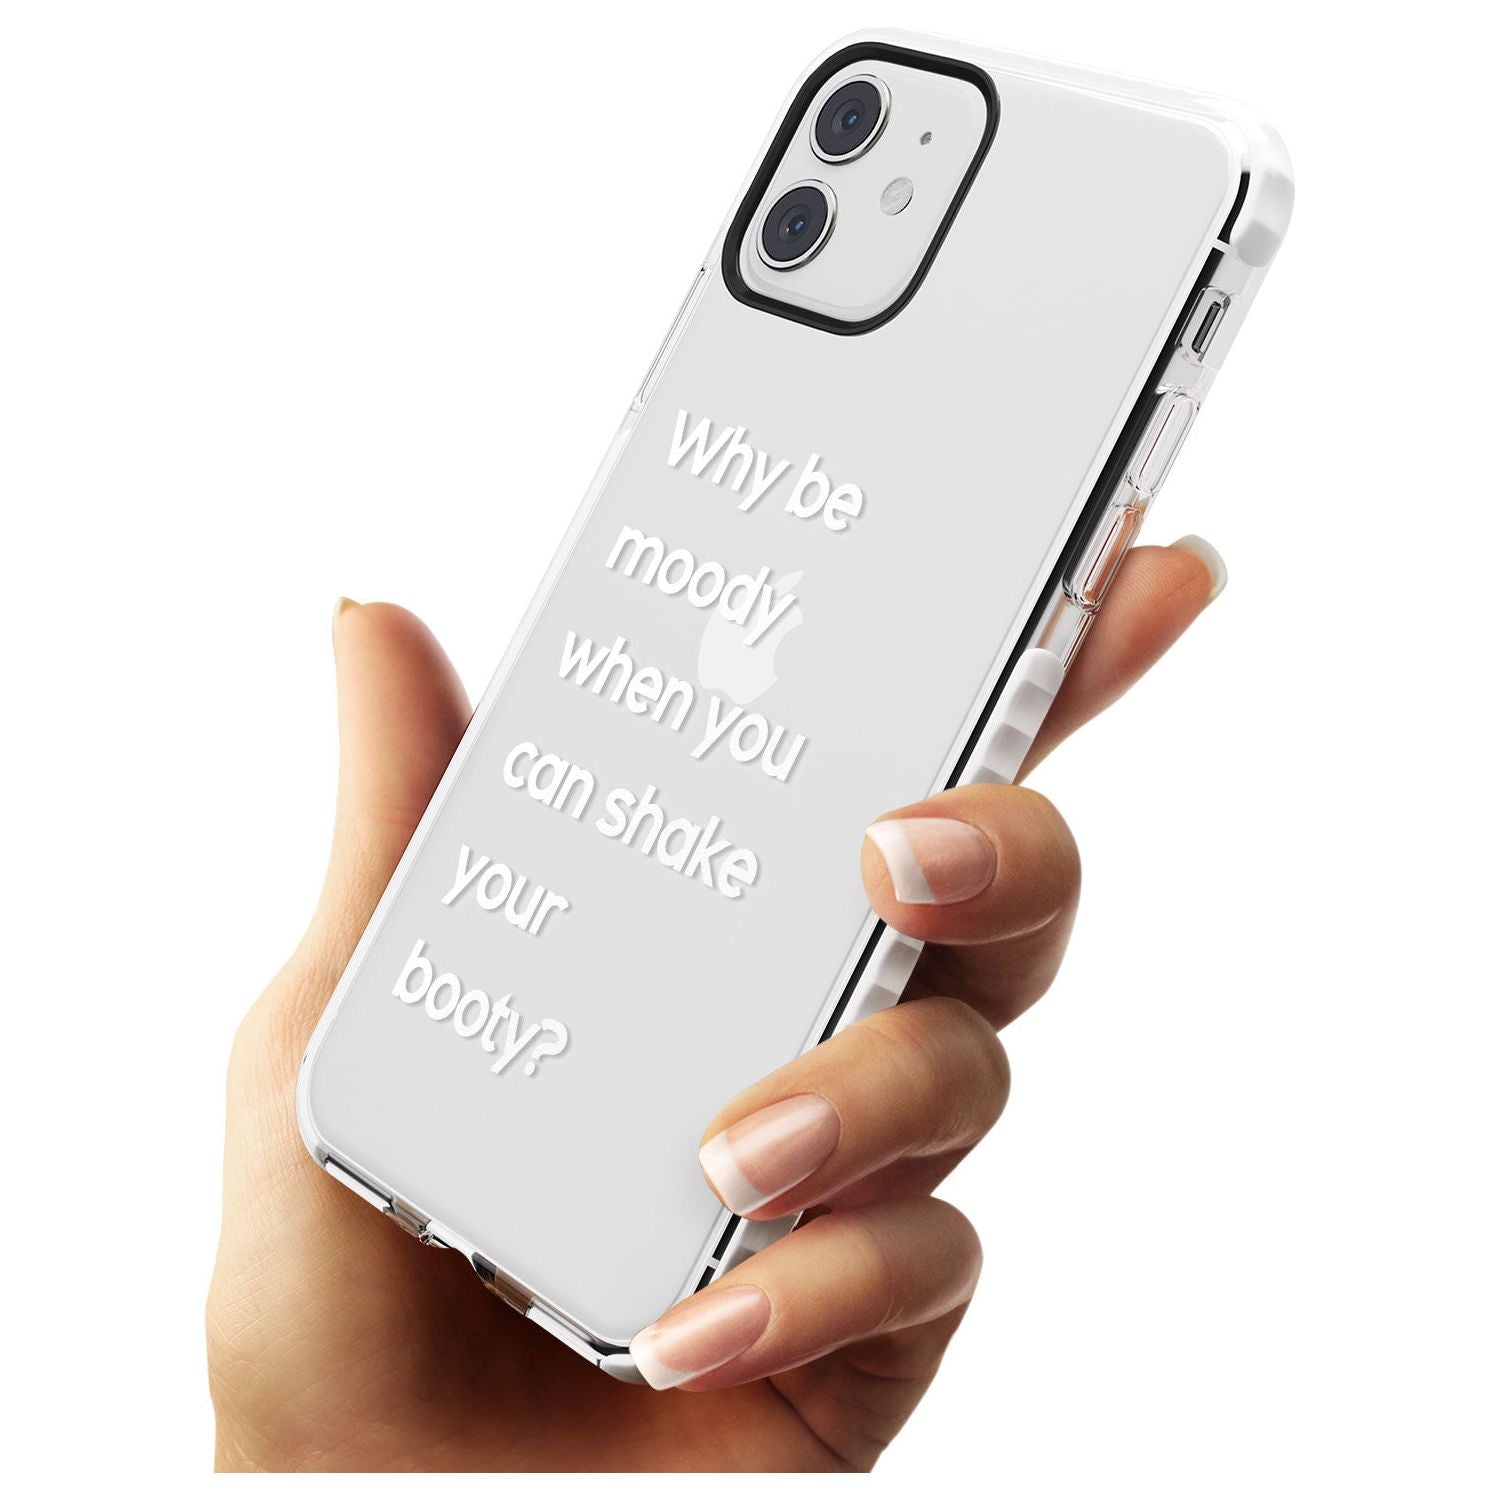 Why be moody? (White) Slim TPU Phone Case for iPhone 11